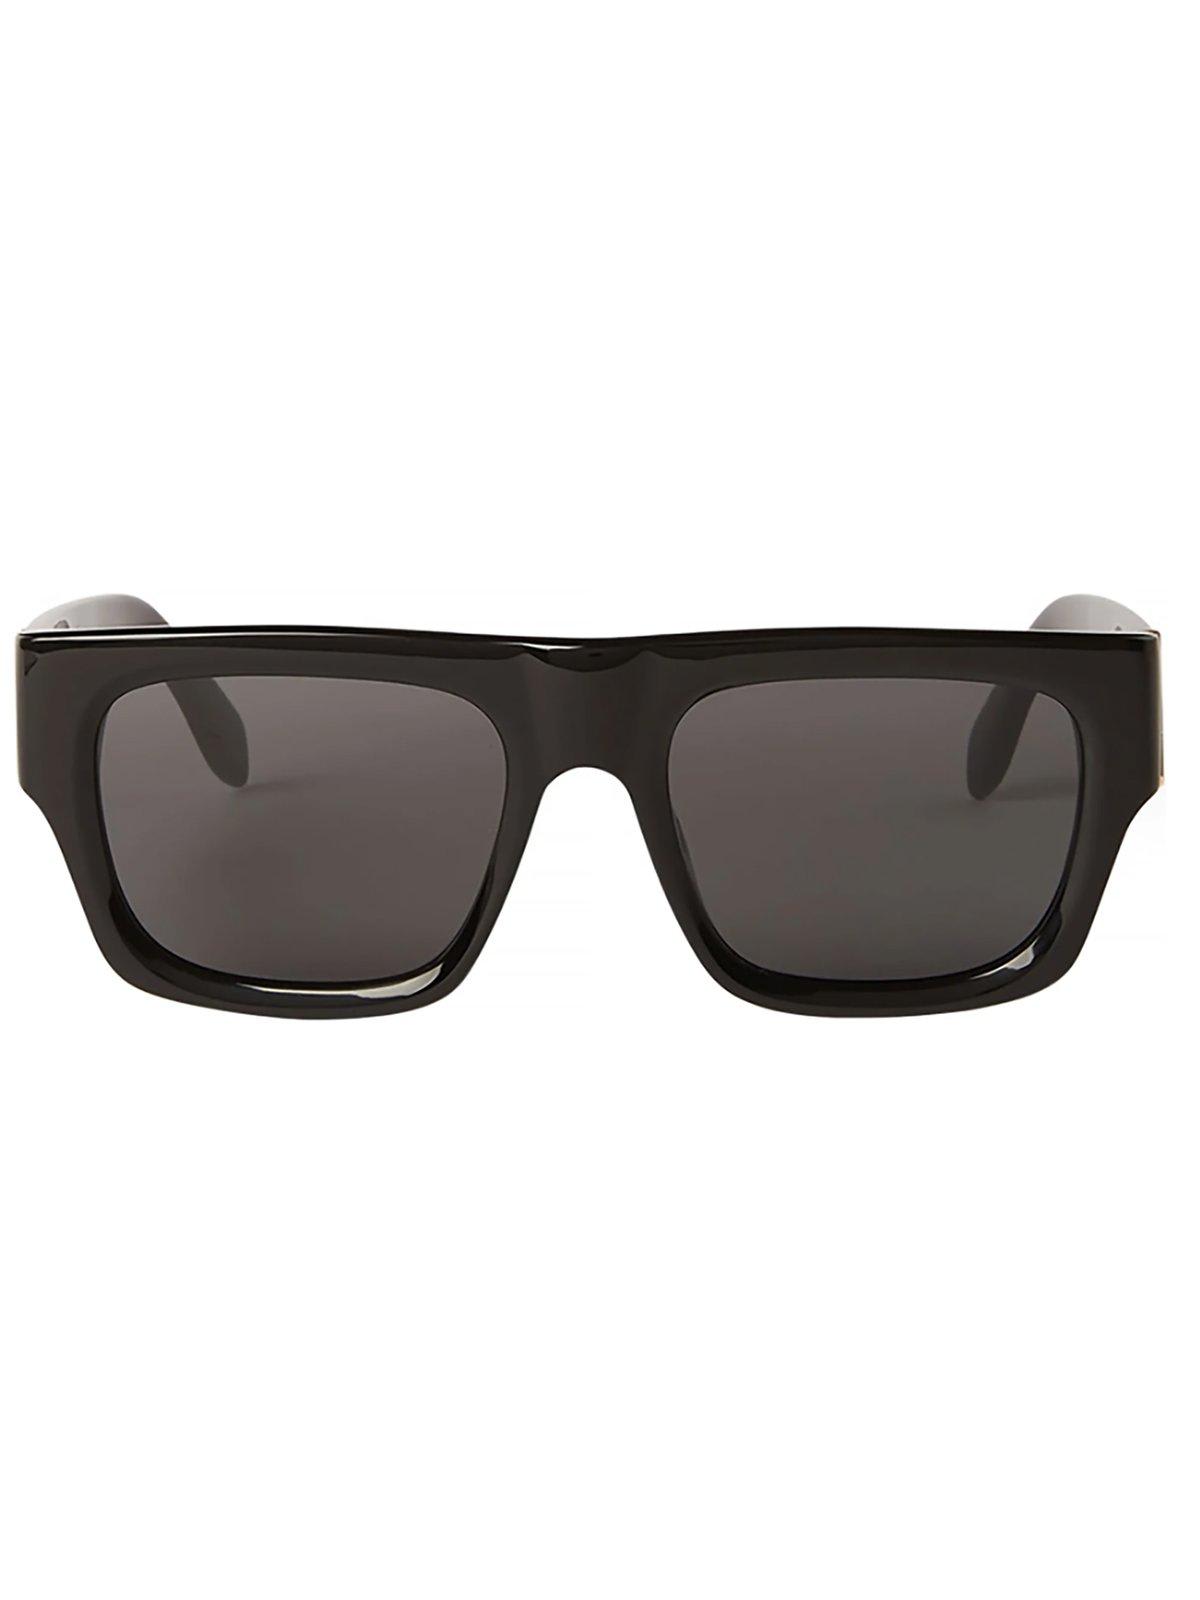 Pixley Square Frame Sunglasses